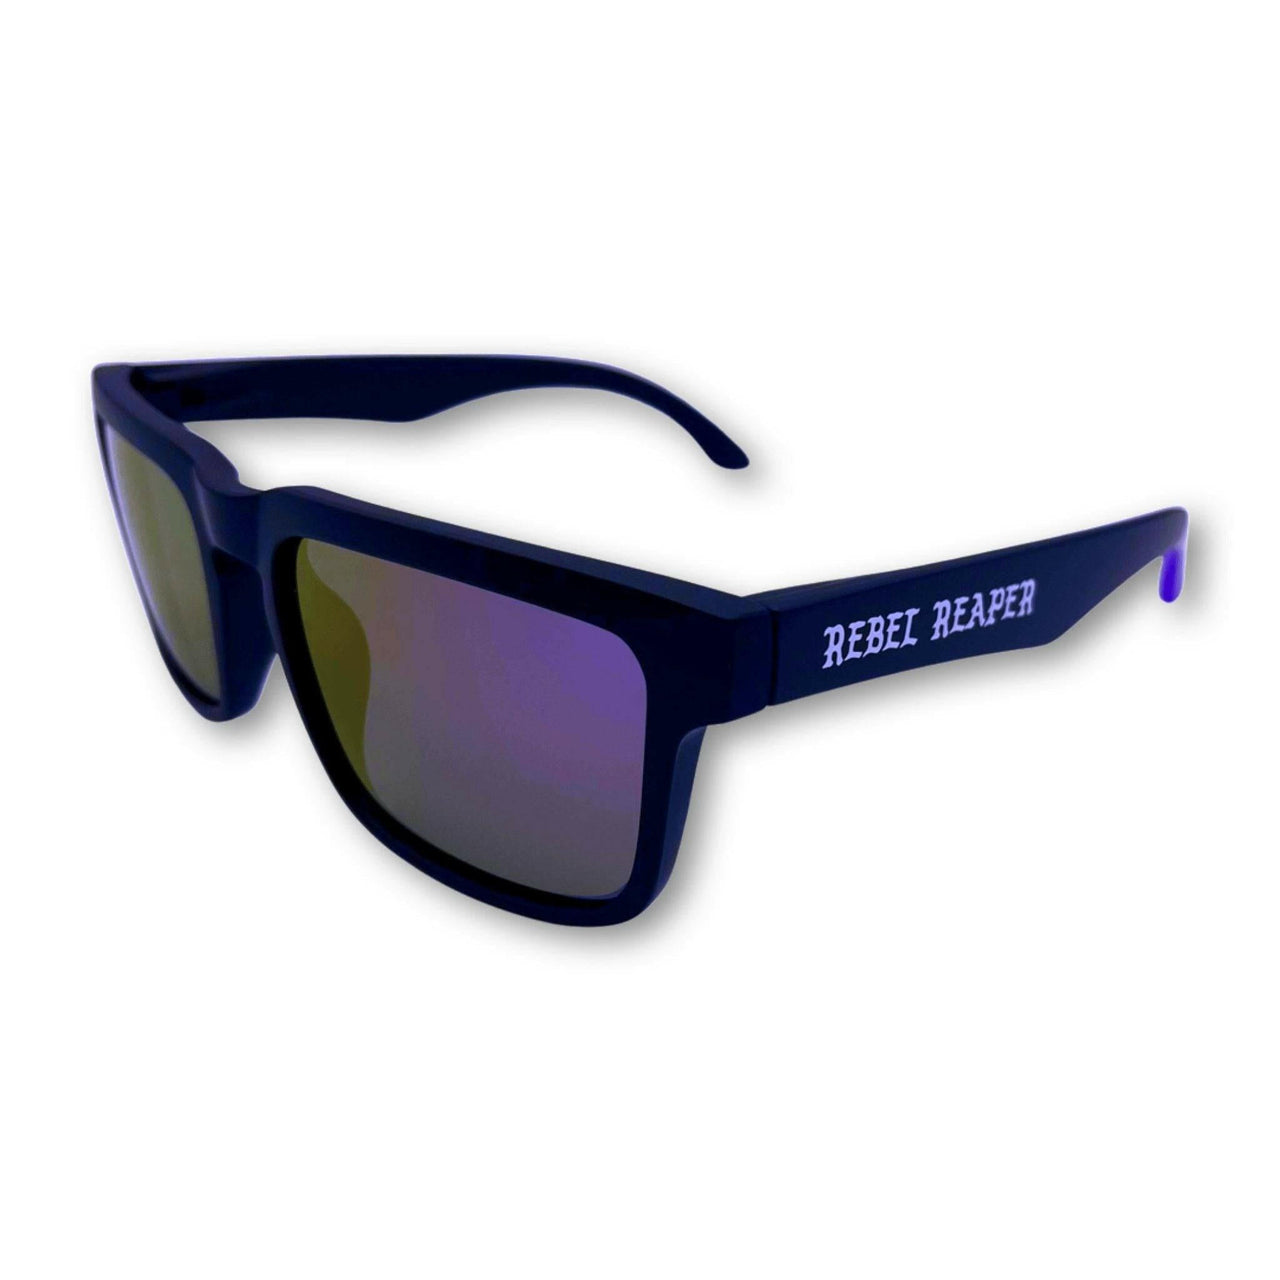 Hustler Purple & Black Sunglasses - Rebel Reaper Clothing Company Sunglasses